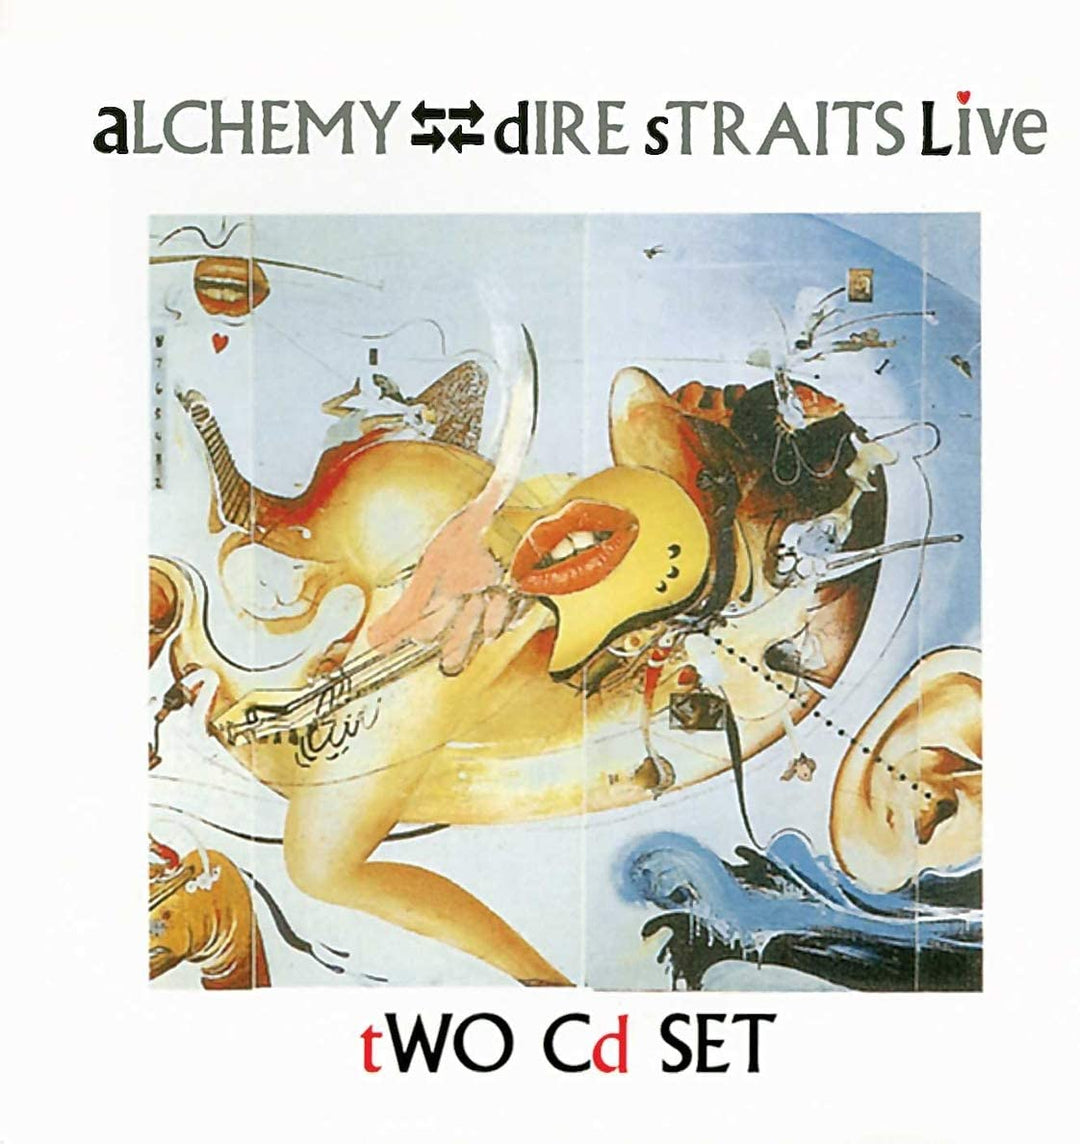 Dire Straits  - Alchemy - Dire Straits Live - 1 & 2 [Audio CD]